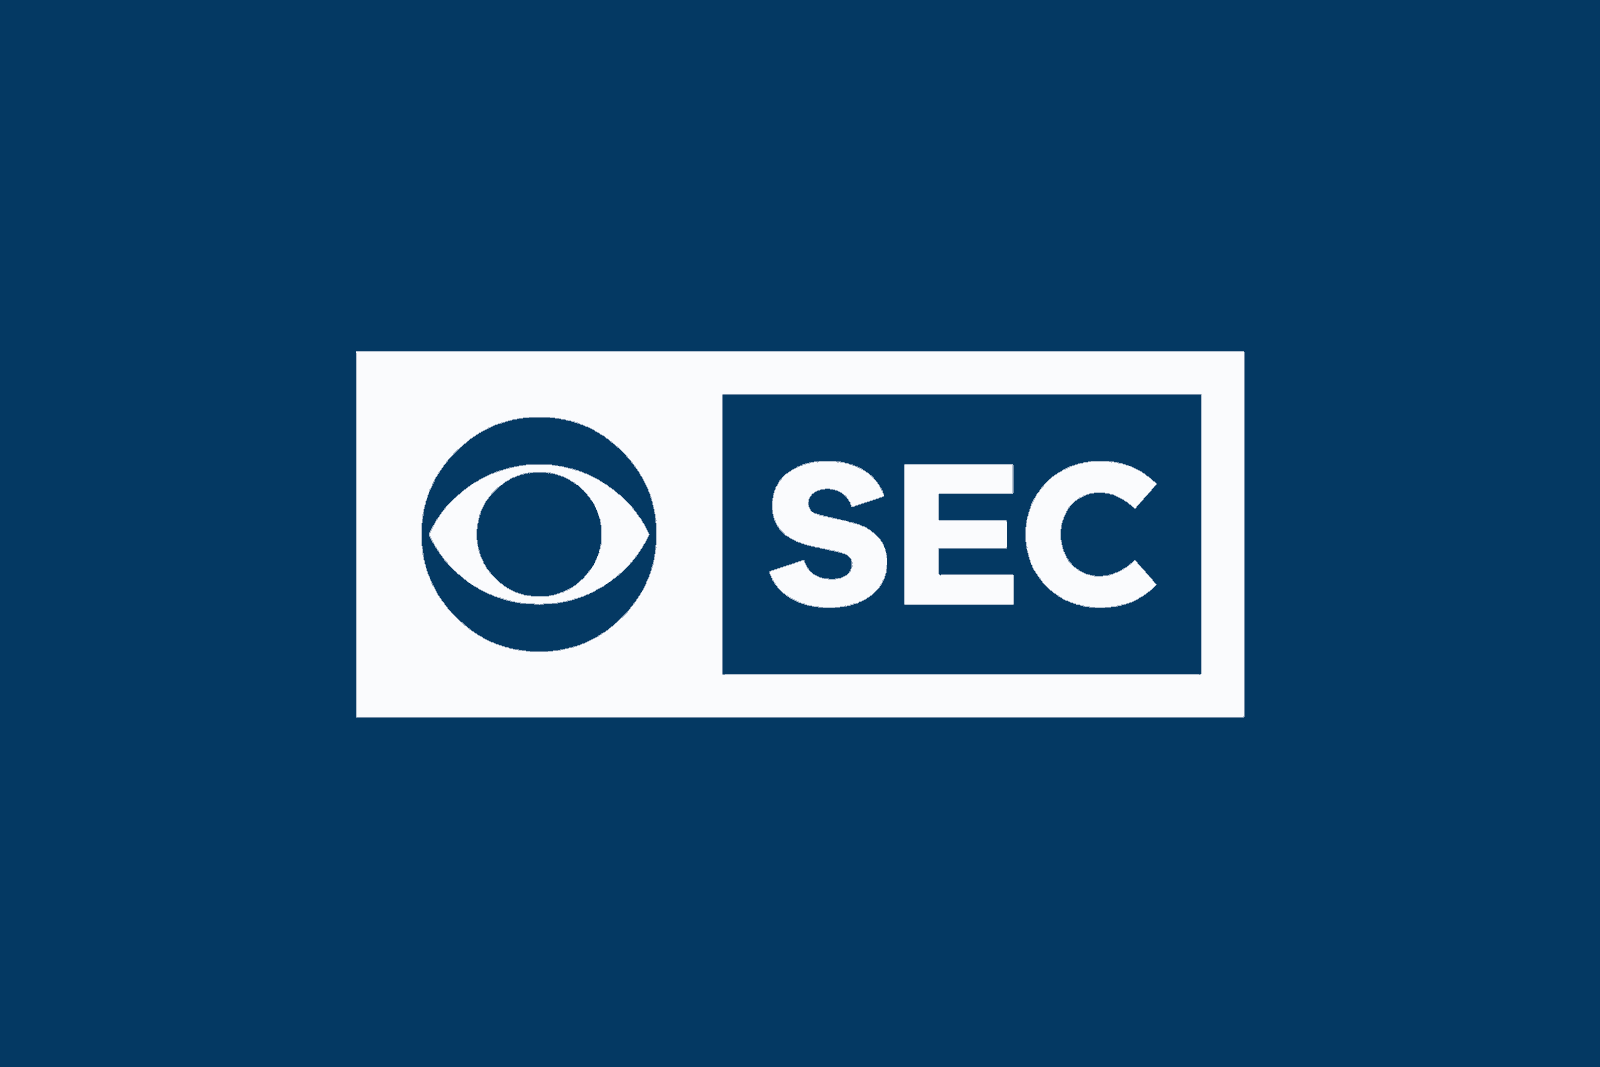 SEC on CBS